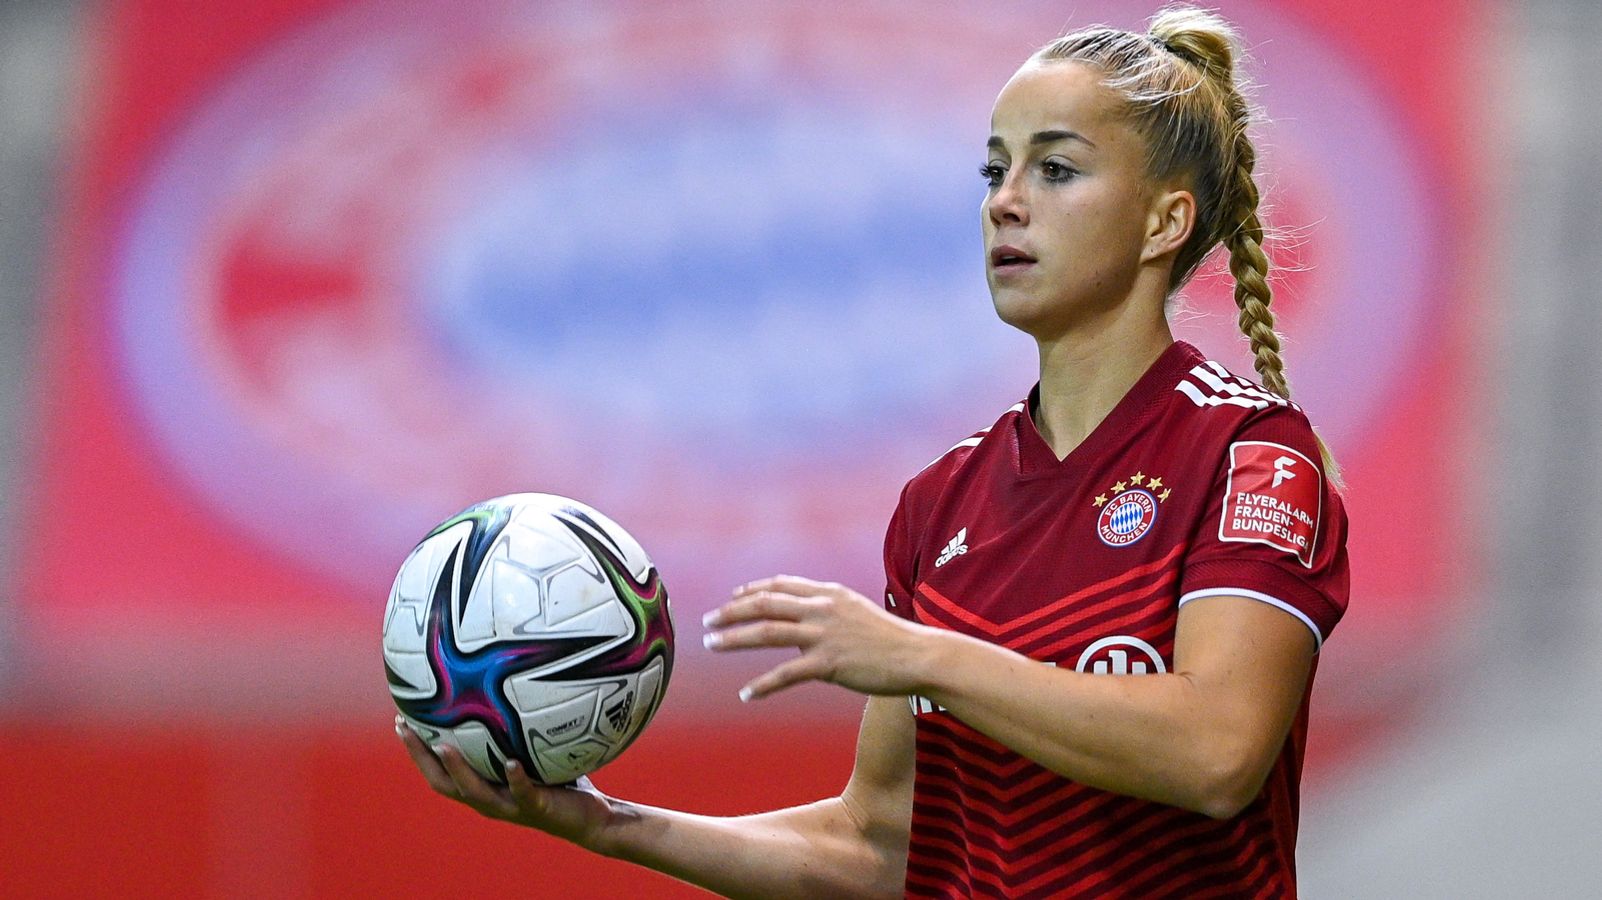 DFB Women: Julia Gwyn returns to World Cup qualifiers

